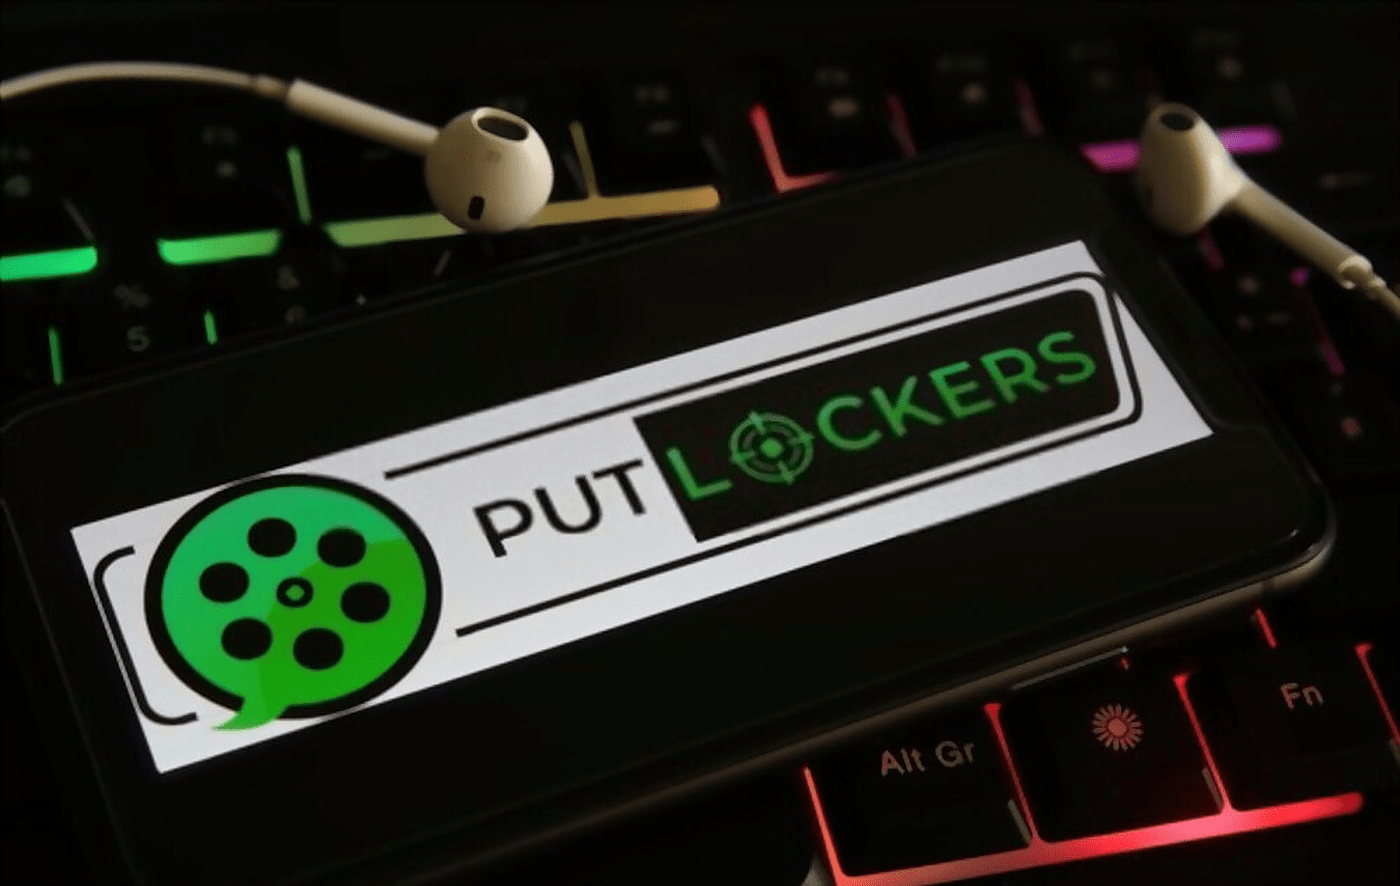 Putlocker without signing up